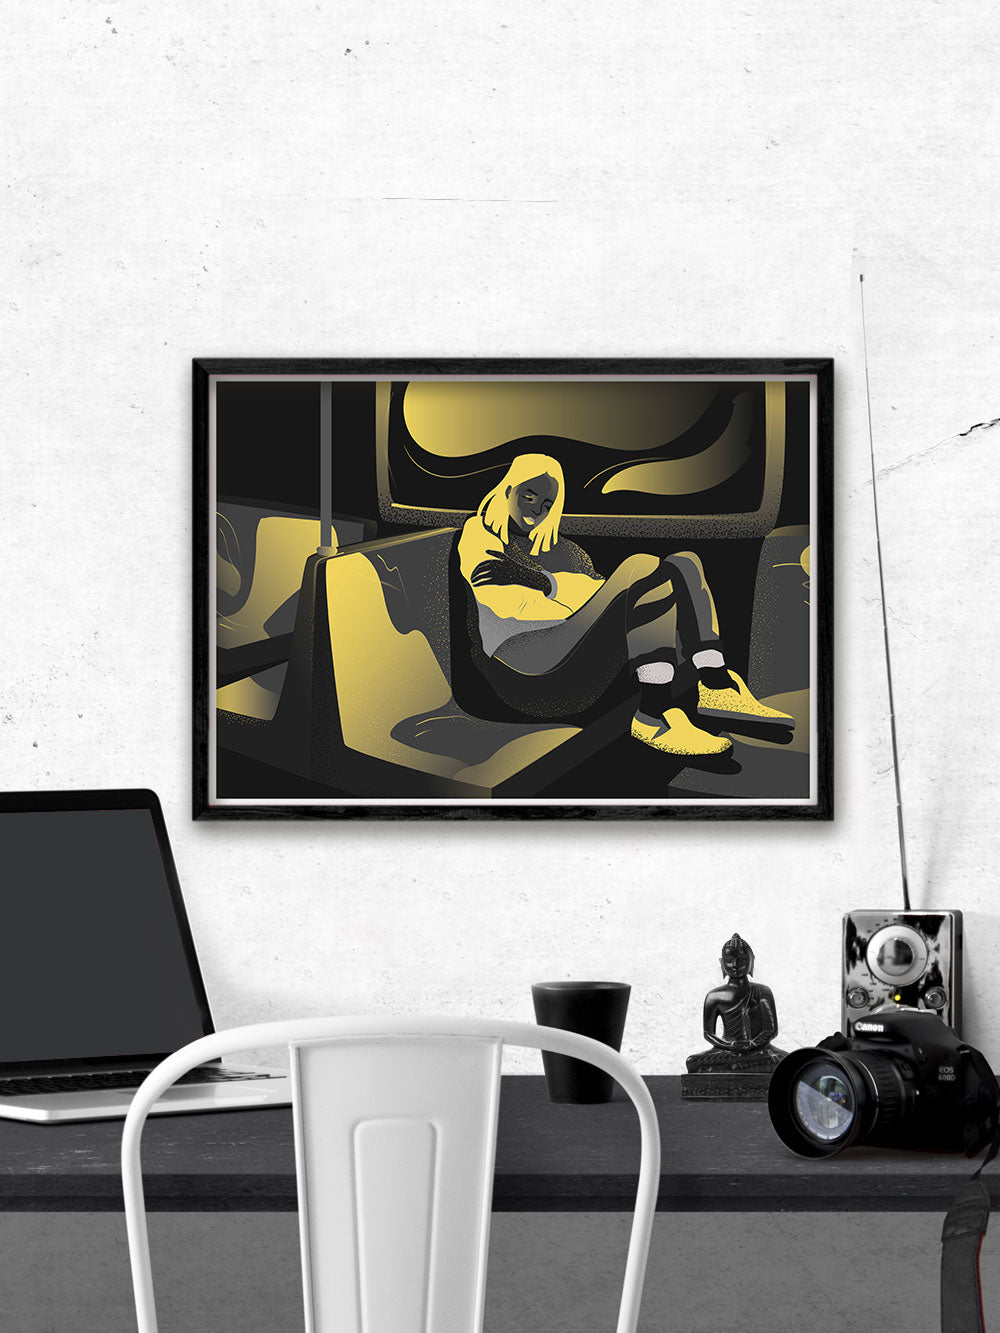 Soul Traveller Yellow Peaceful Artwork by Figen Demireva Installed Above A Desk